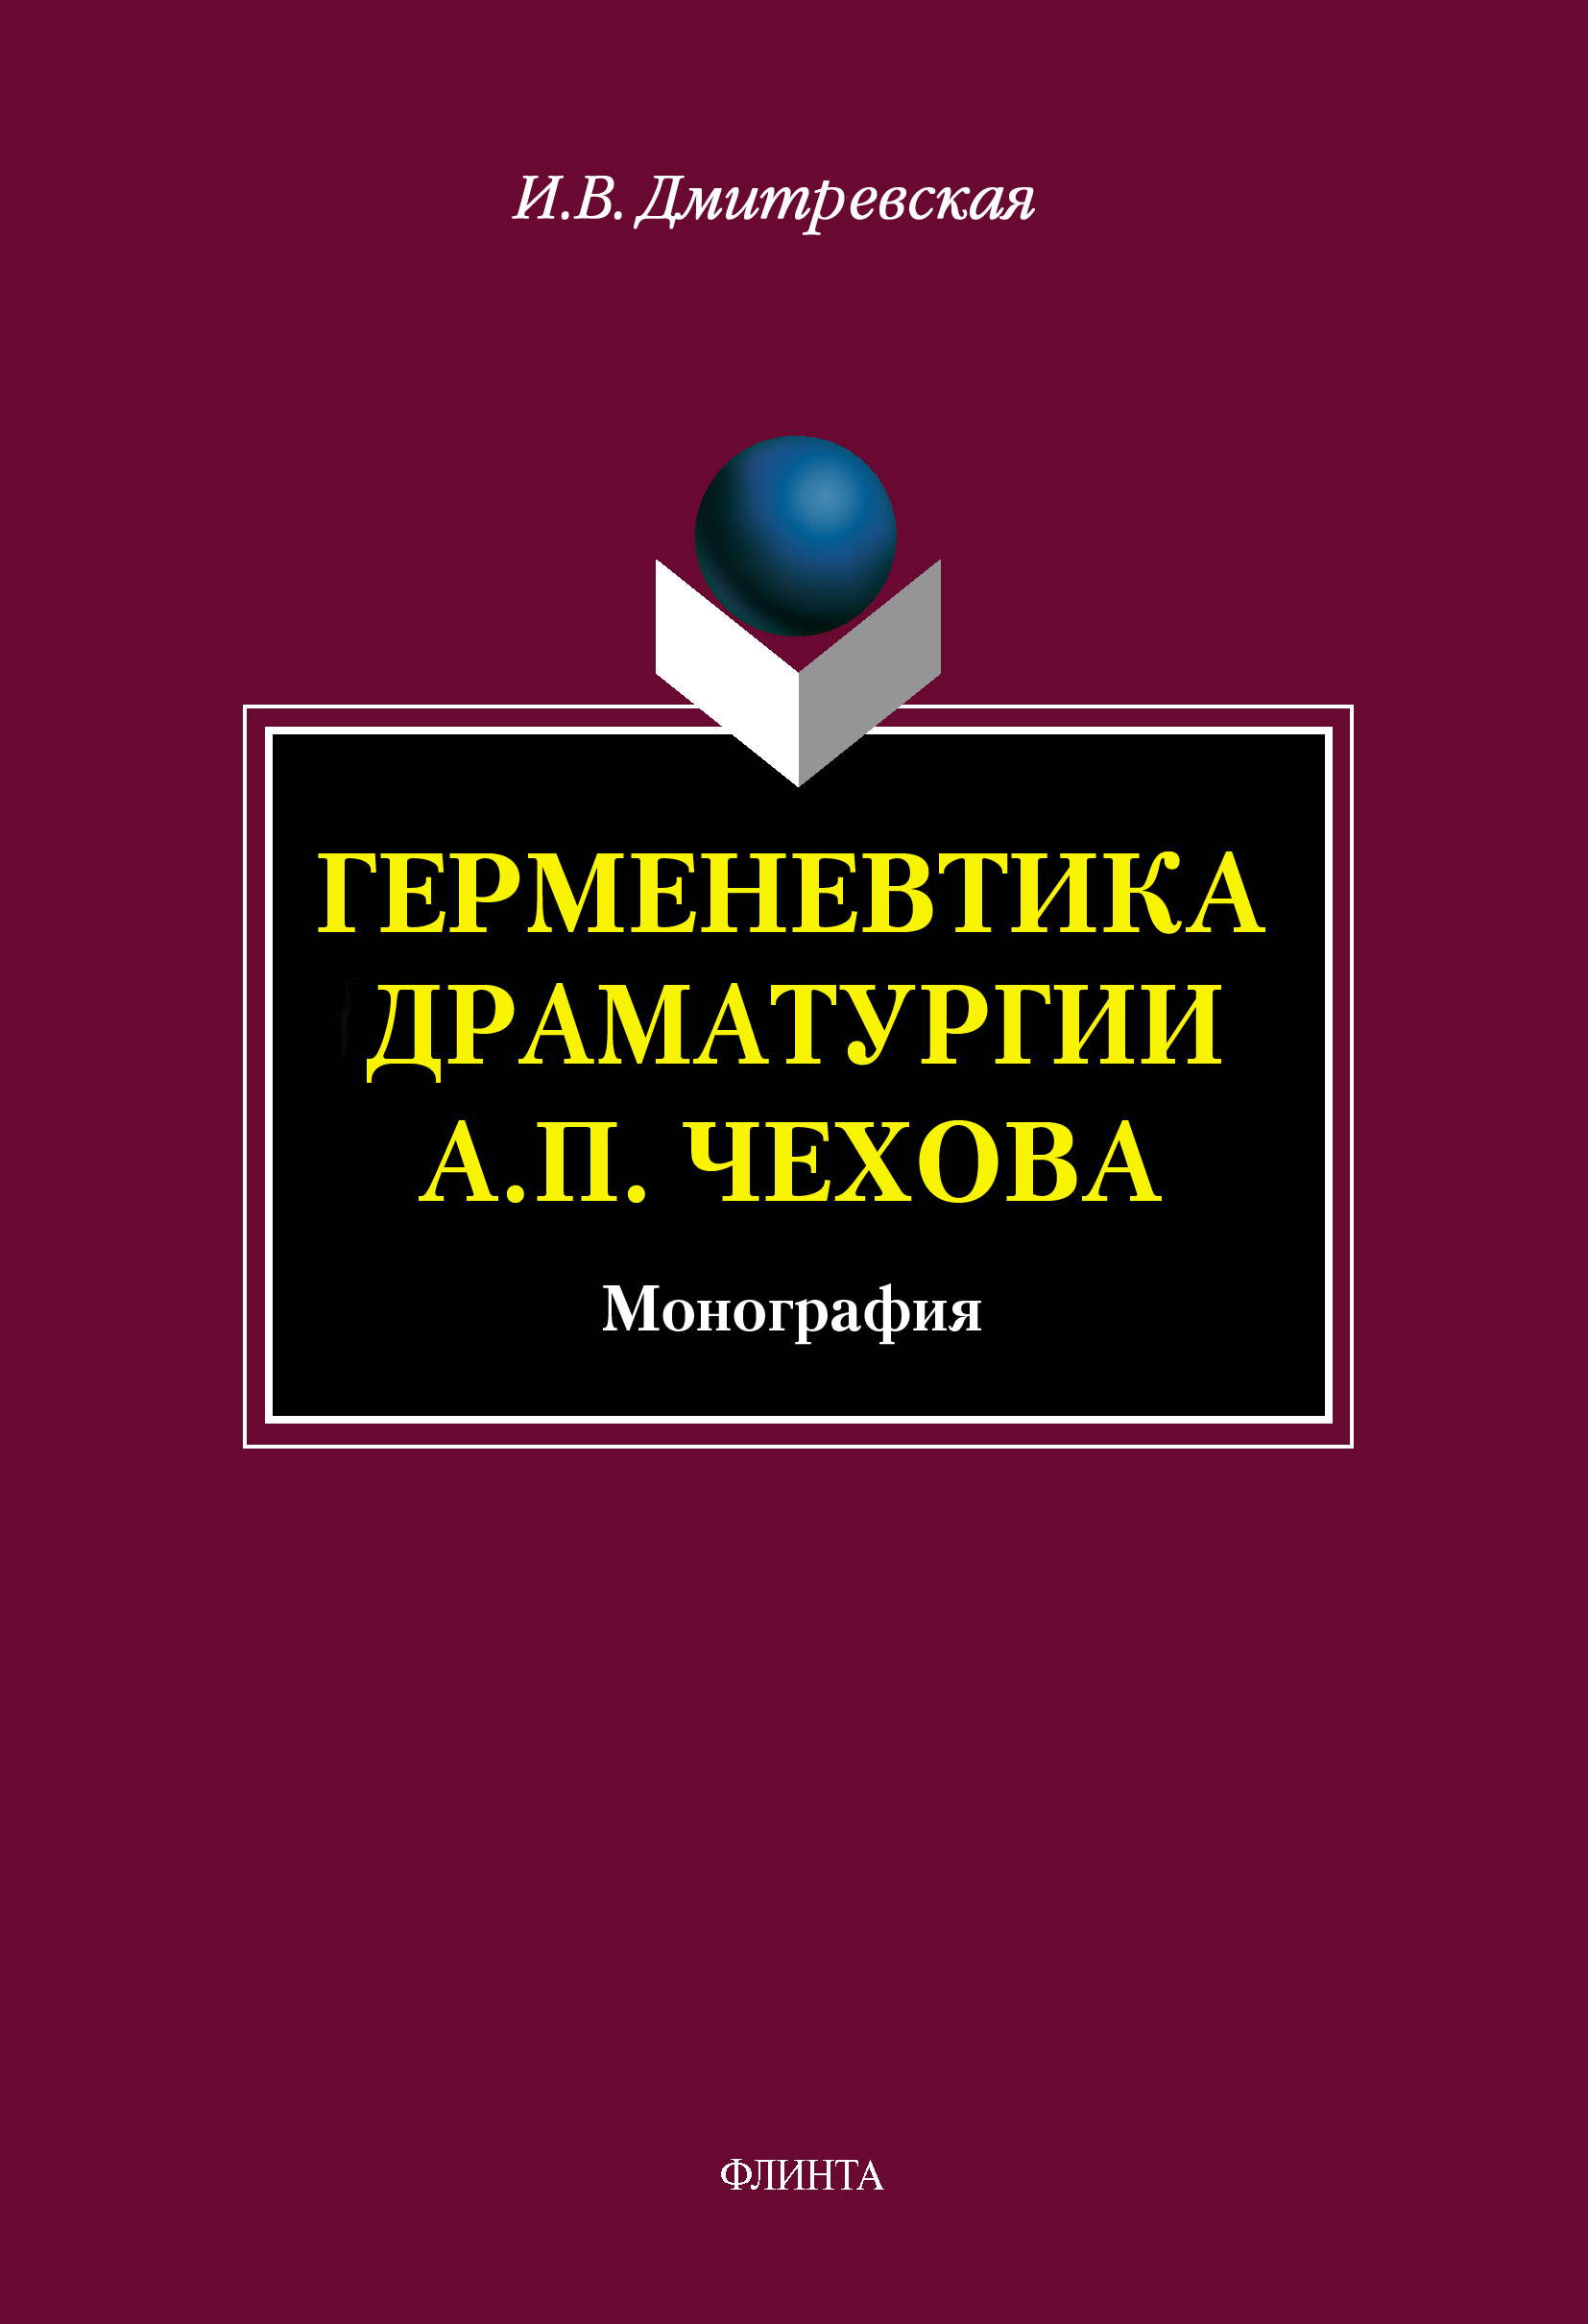 Герменевтика драматургии А. П. Чехова